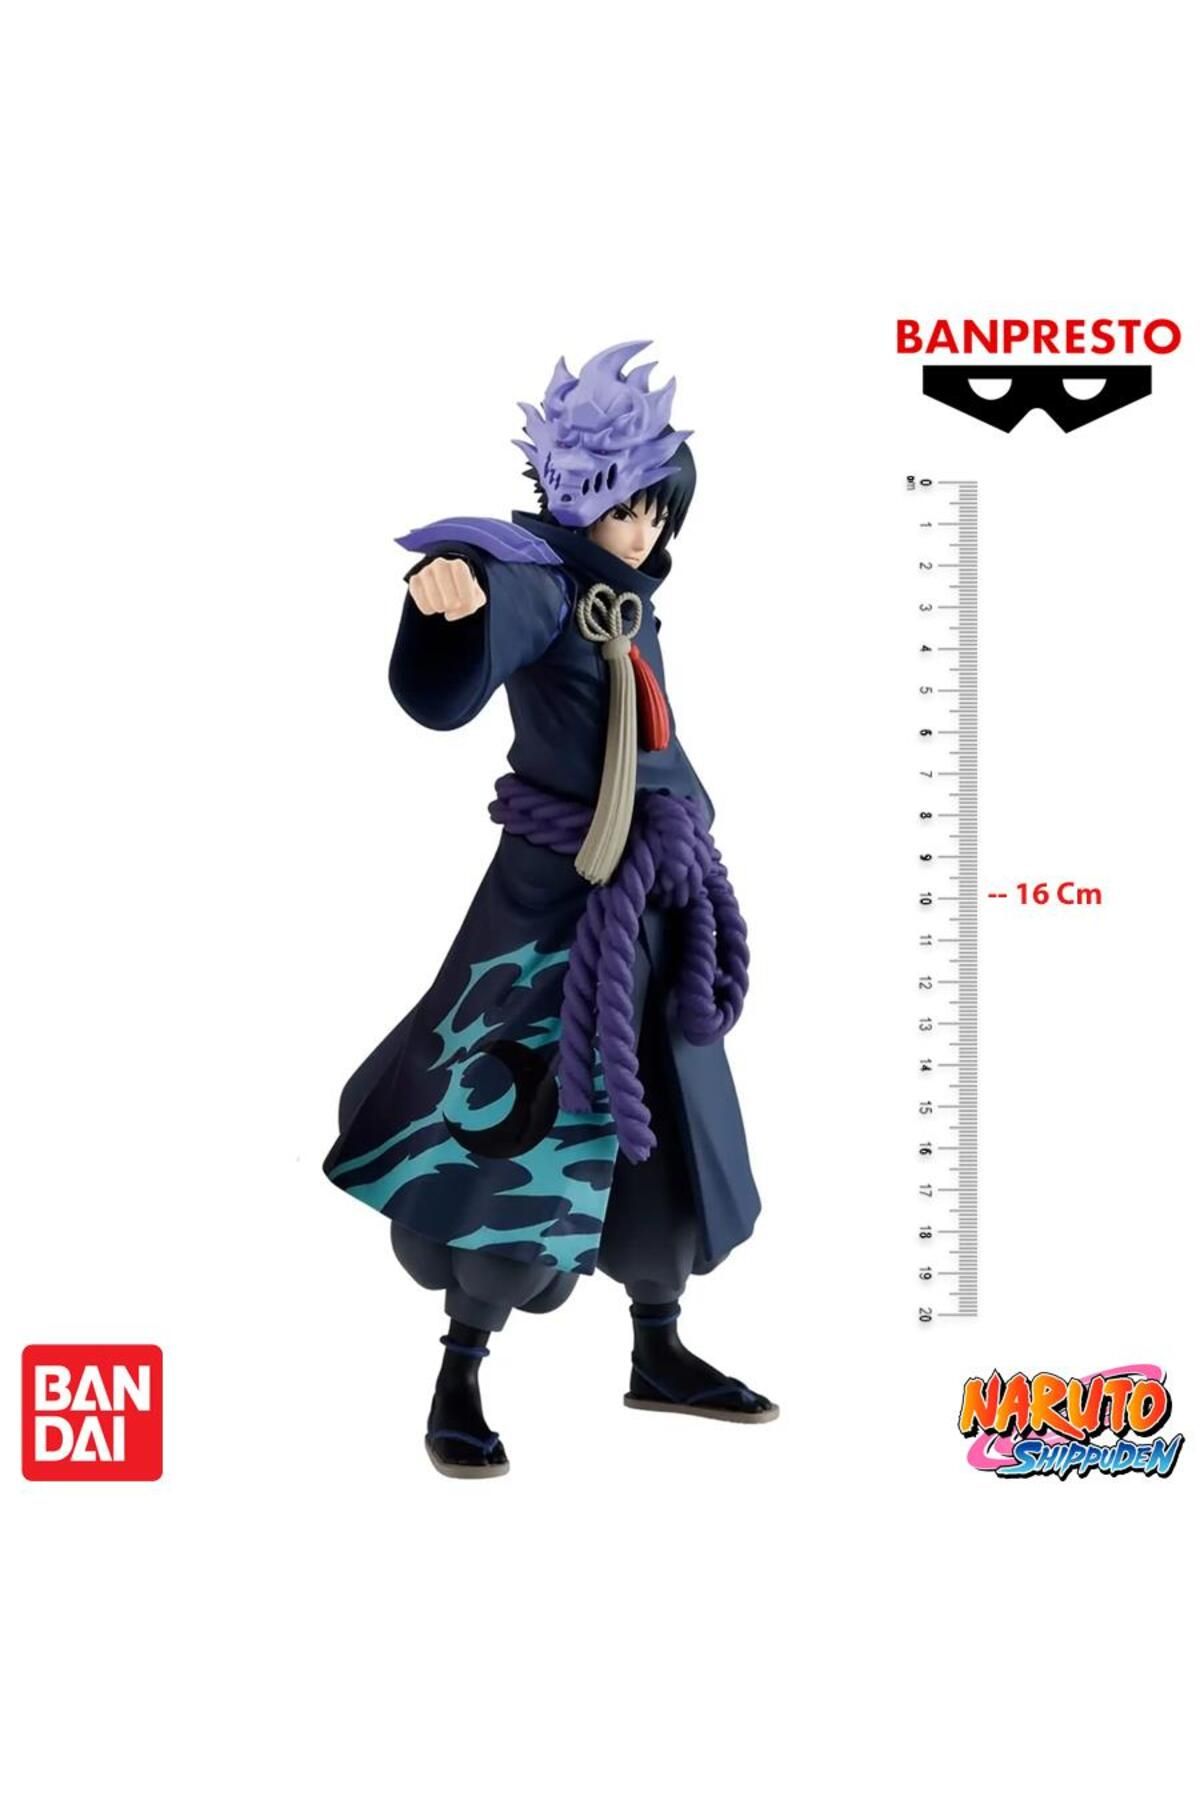 BANDAI Banpresto 20th Anniversary Costume Naruto Shippuden - Uchiha Sasuke Statue 16cm